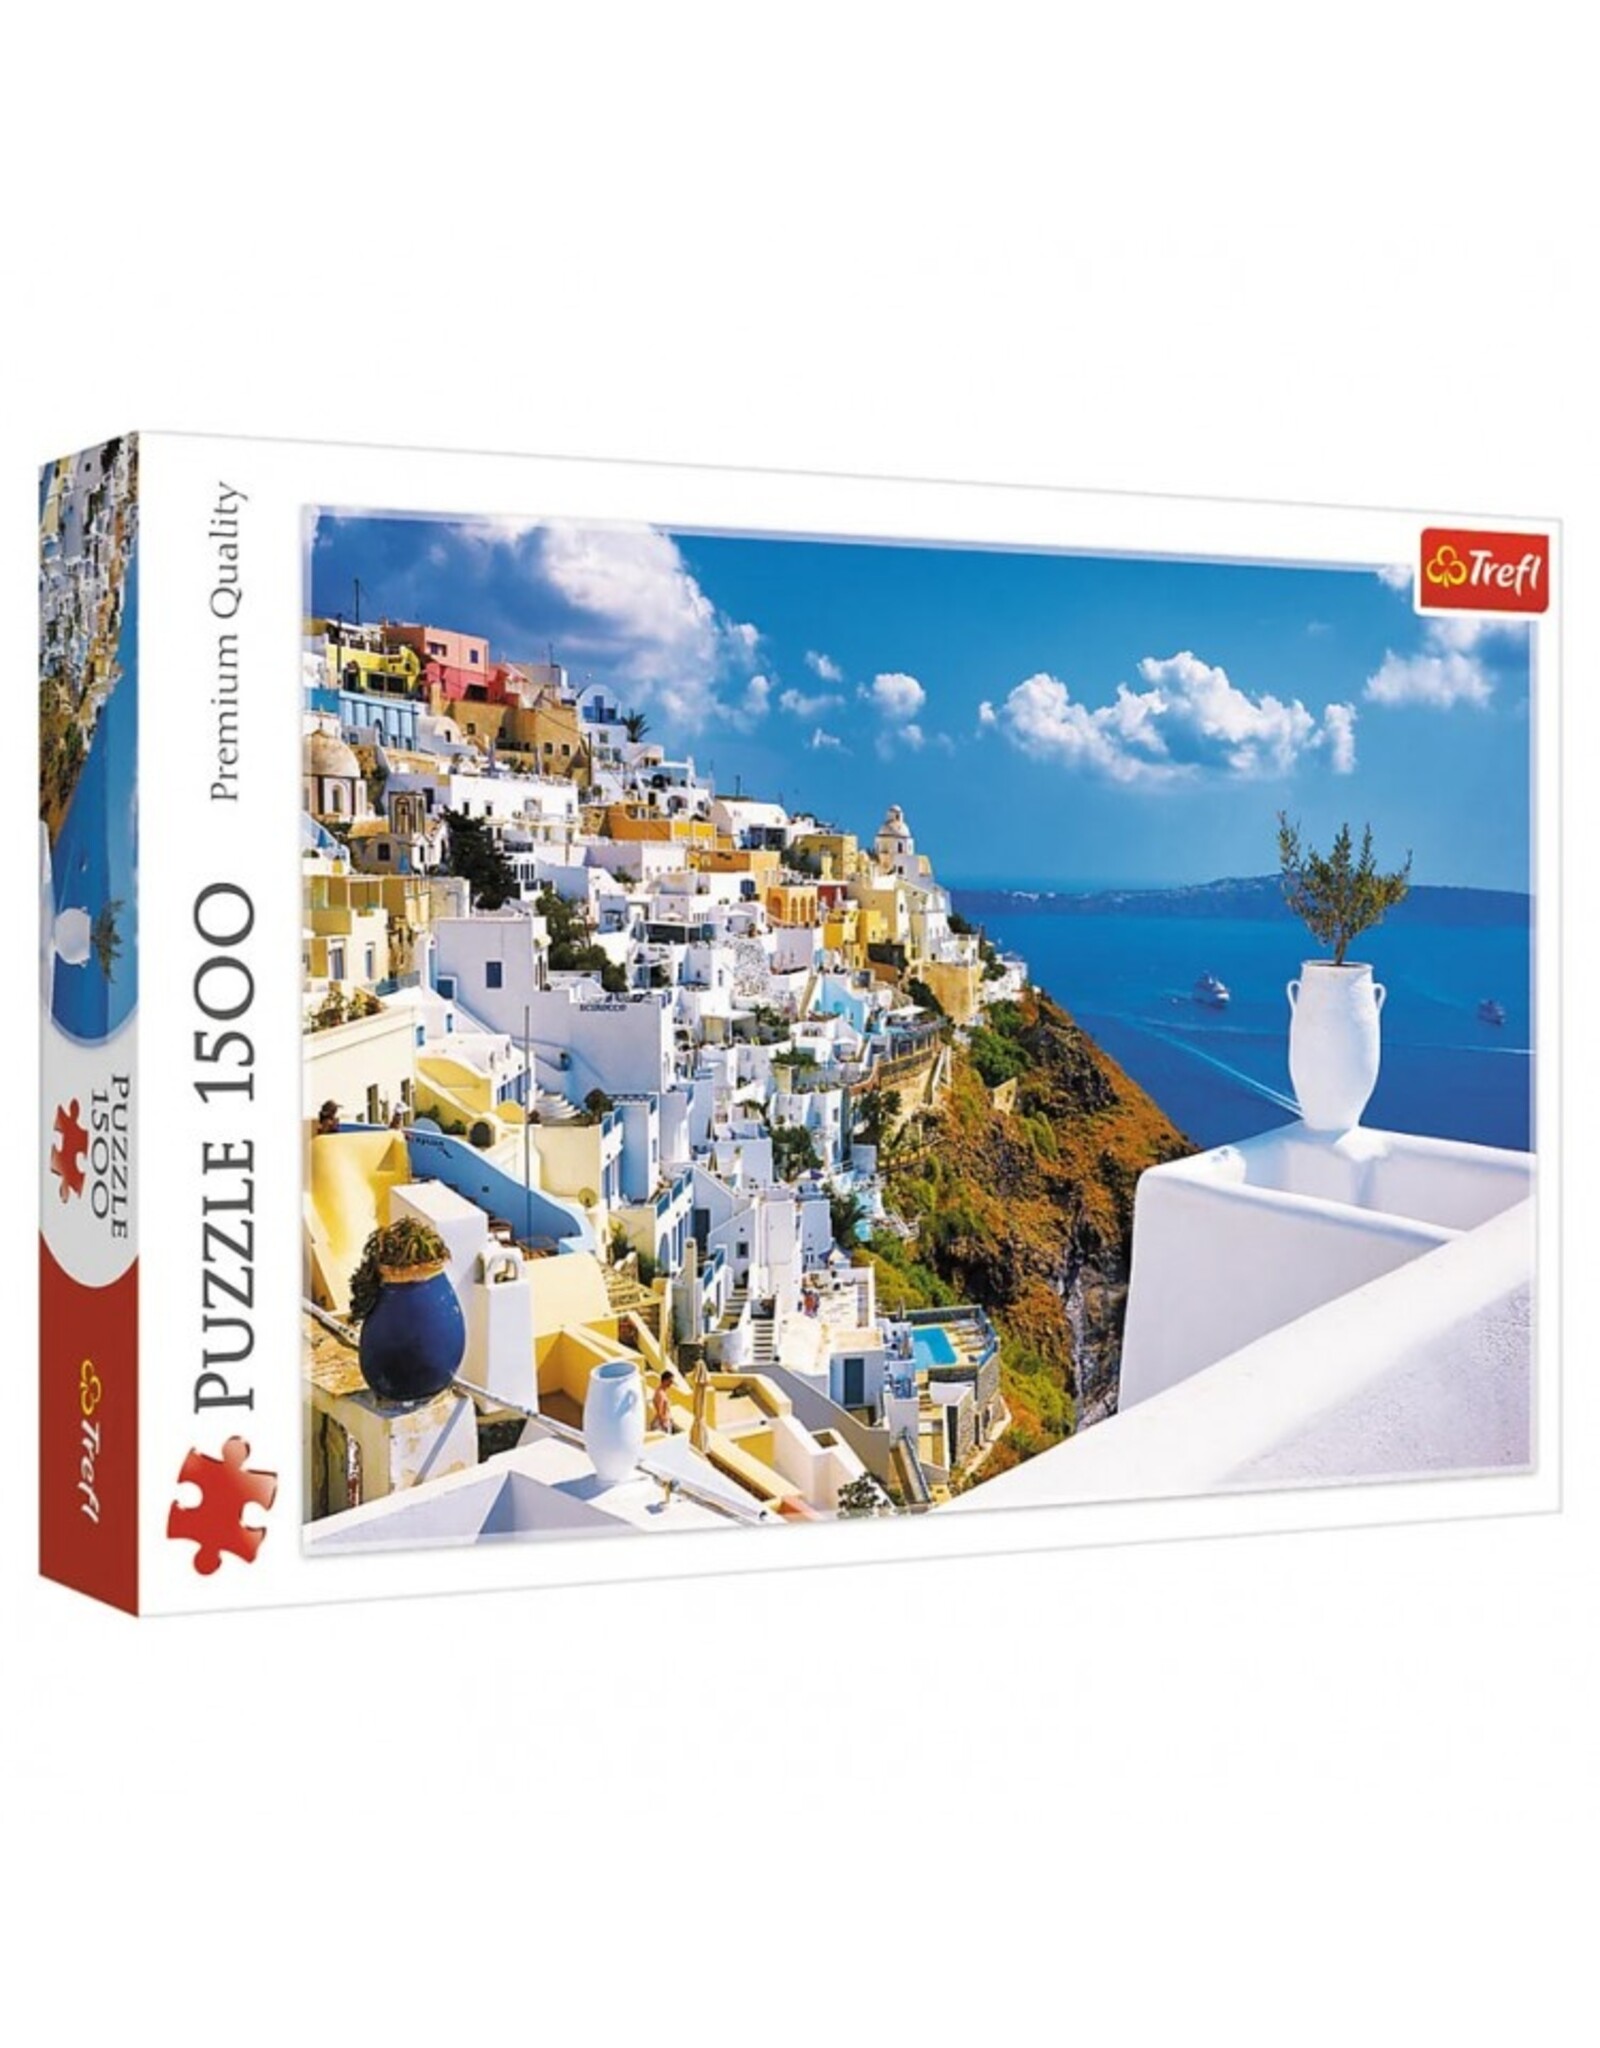 Trefl Puzzle: Santorini, Greece 1500pc